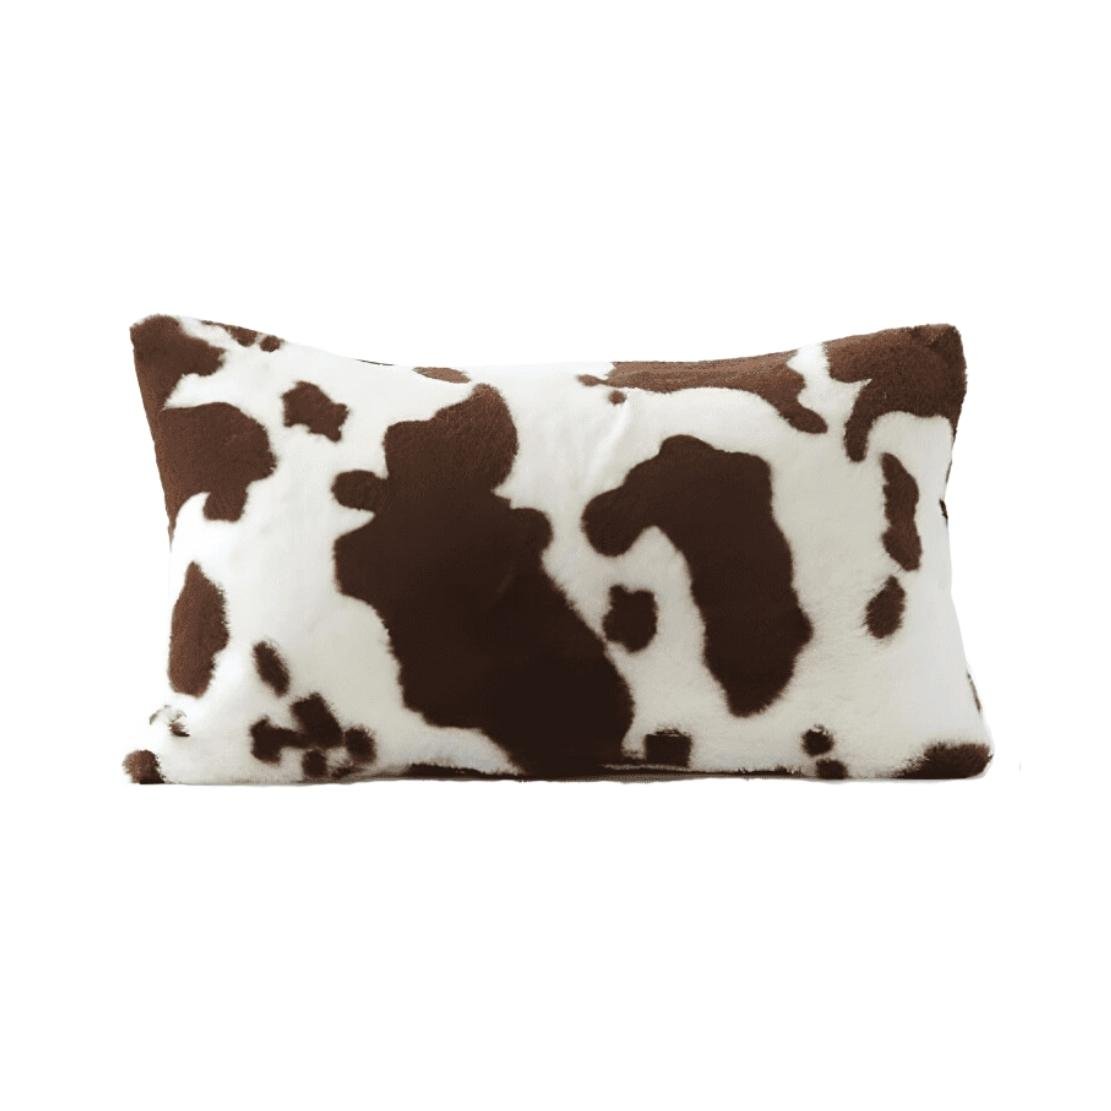 Fluffy faux cow print throw pillow / Brown & White